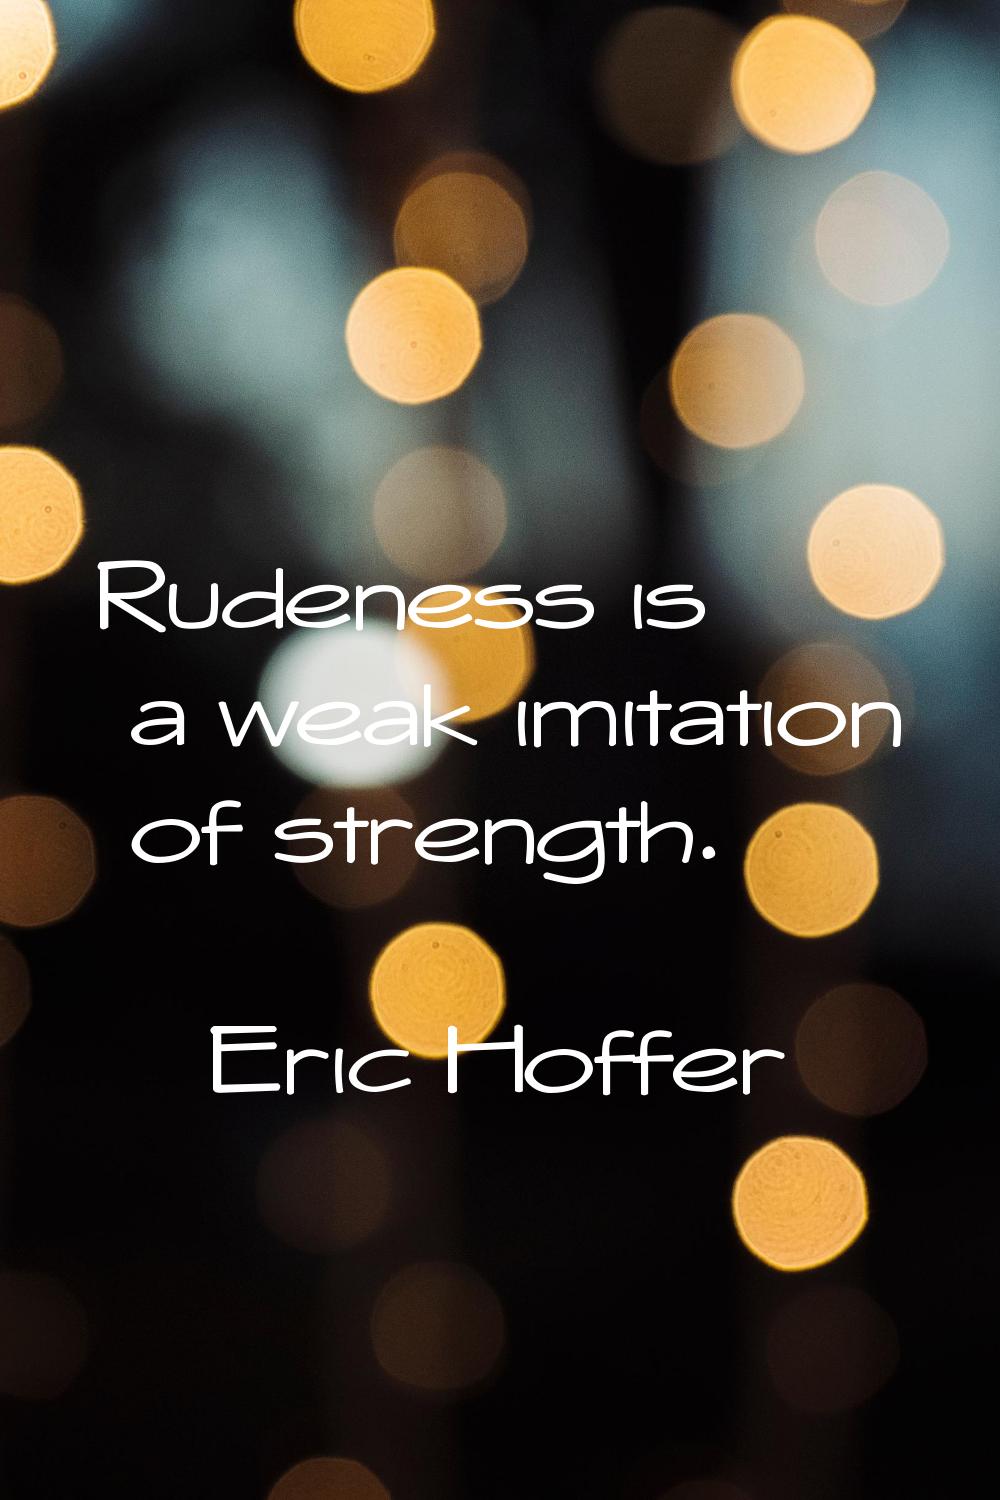 Rudeness is a weak imitation of strength.